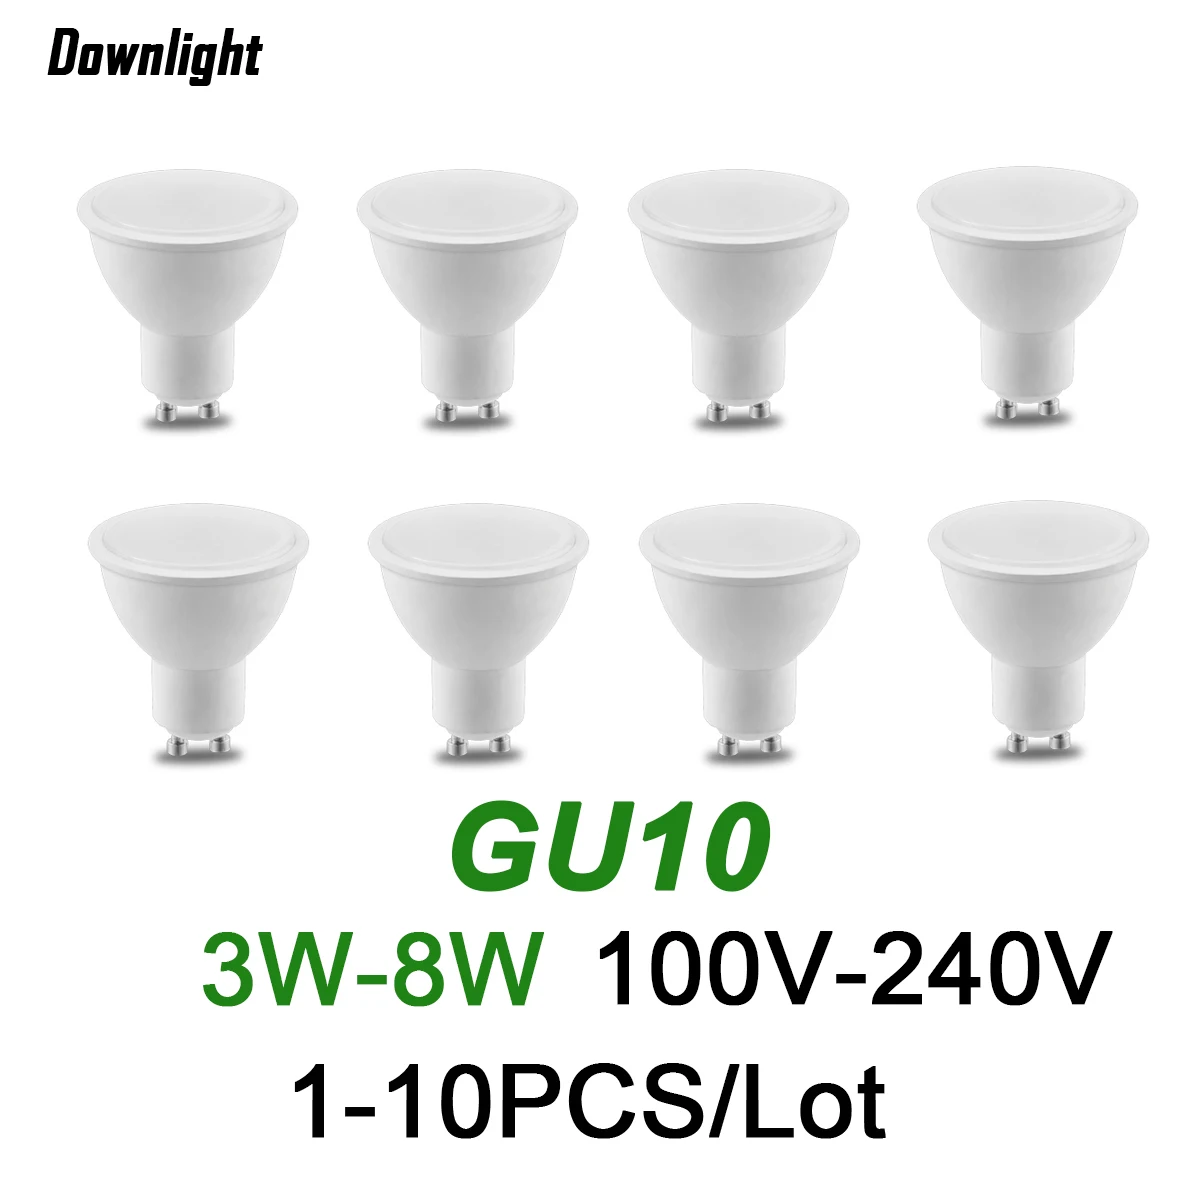 

1-10Pcs Spot LED GU10 220V Spotlight 100V-240V Mini Ampoule 3w-8w Replacement 100W Halogen Lamp for Kitchen Studio Bathroom